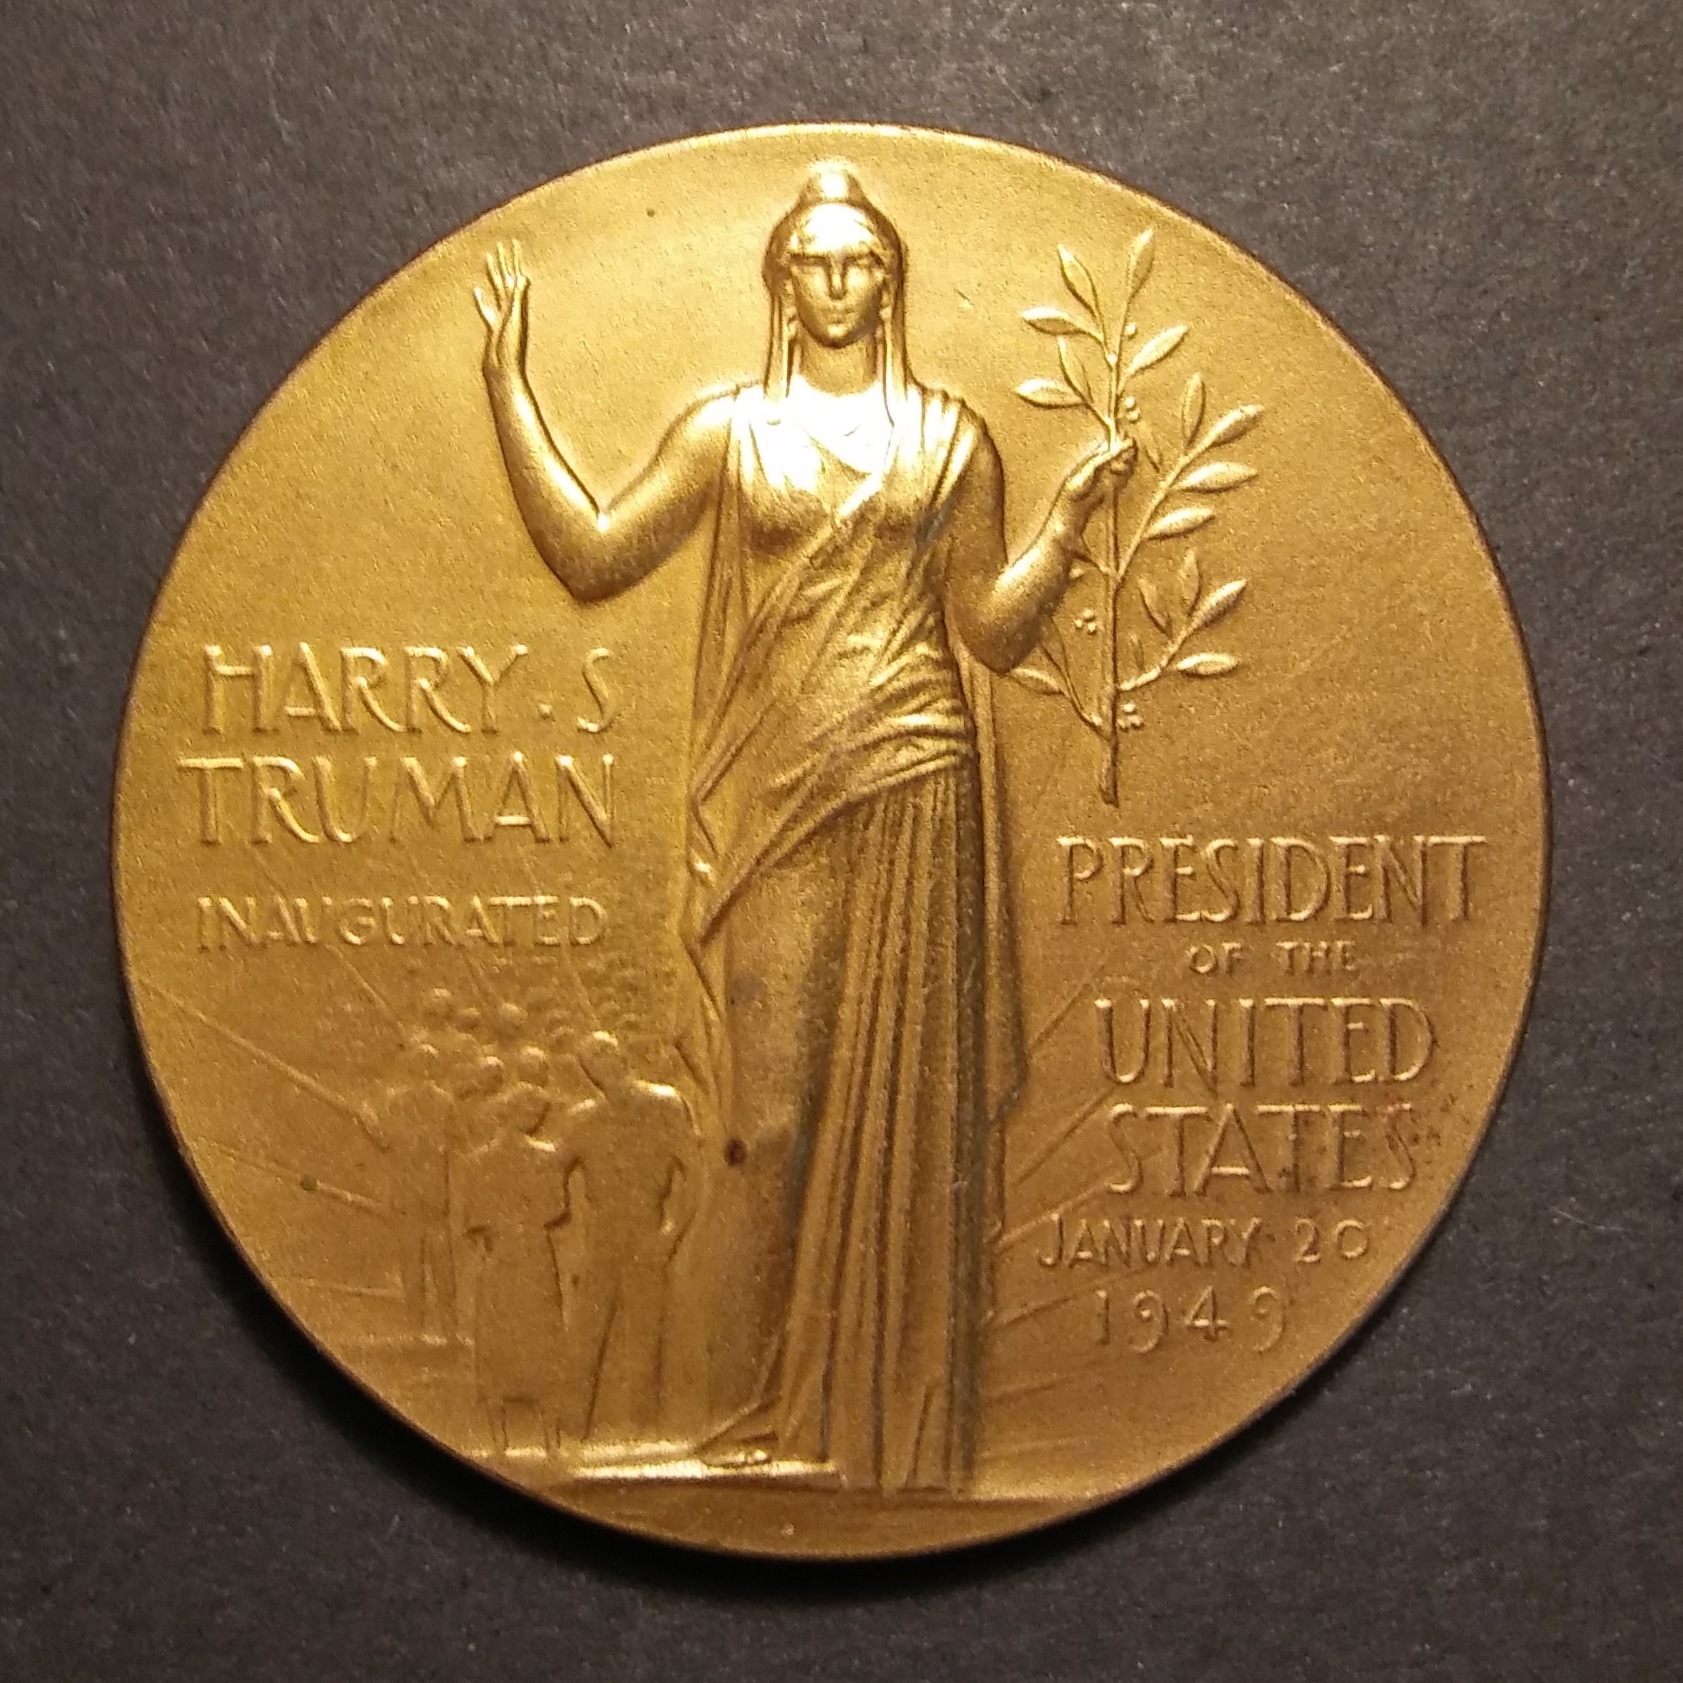 Harry Truman inaugural medal Rev..jpg